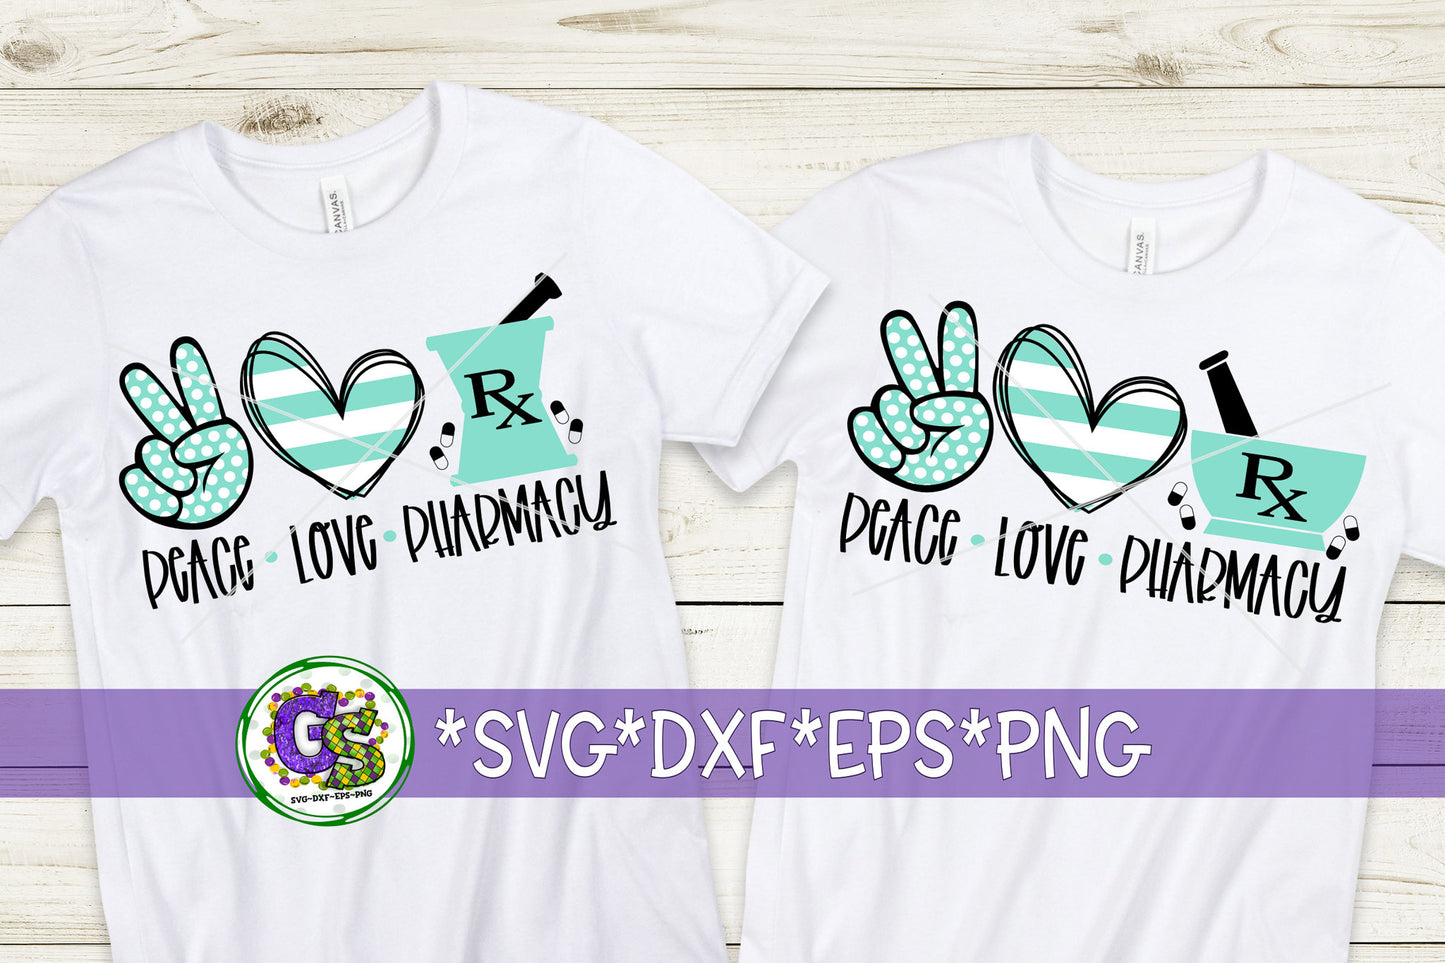 Pharmacy SvG | Peace Love Pharmacy svg dxf eps png. Pharmacist SVG  | Peace Love Pharmacy SvG | Essential SvG | Pharmacist Instant Download